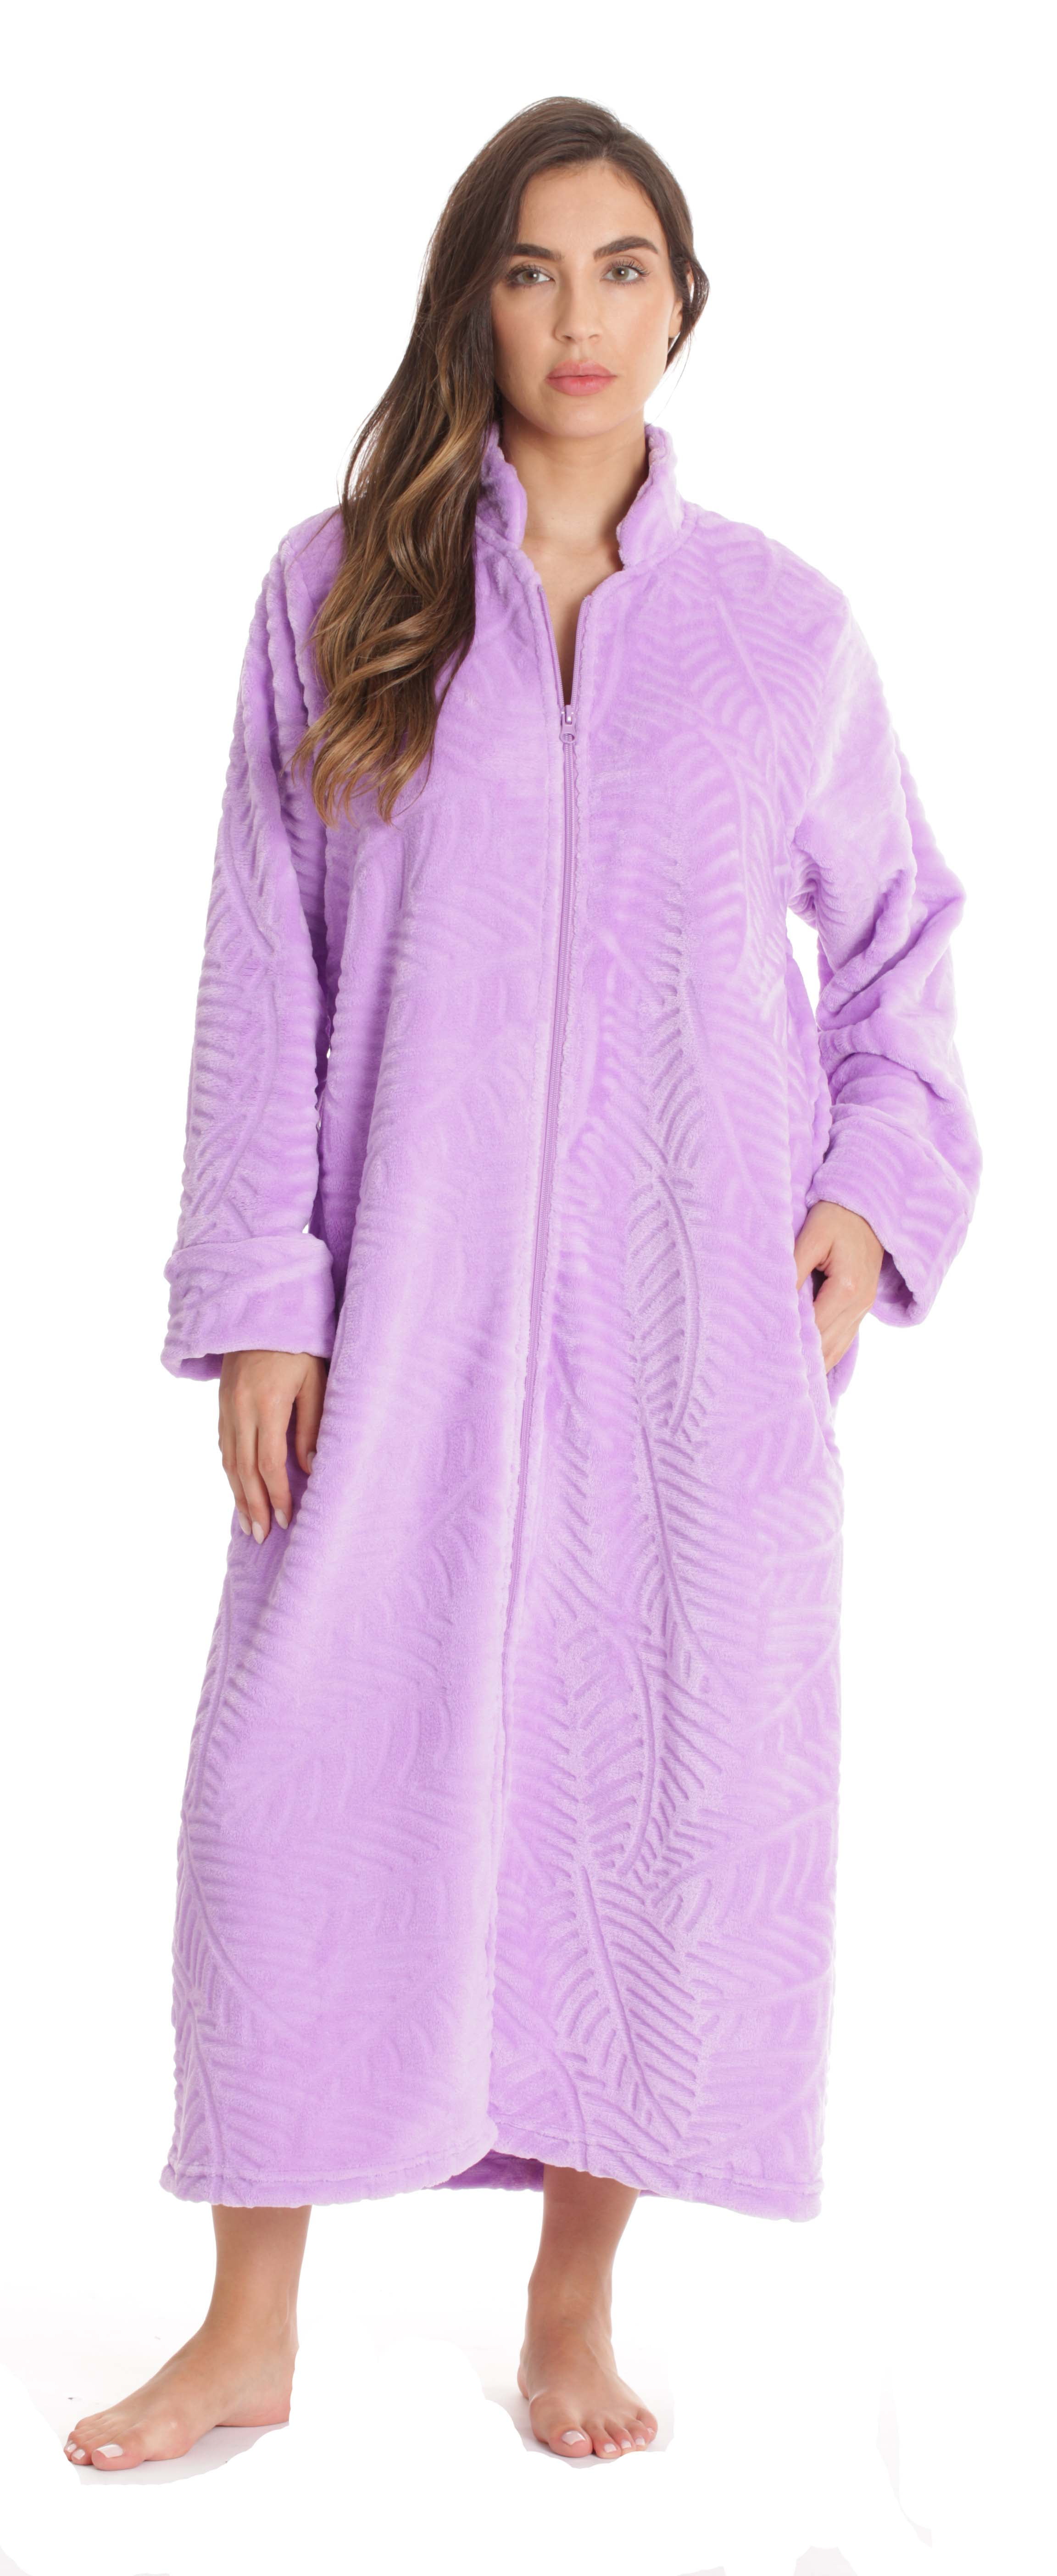 Just Love Plush Zipper Lounger Robe (Lilac, X-Large) - Walmart.com